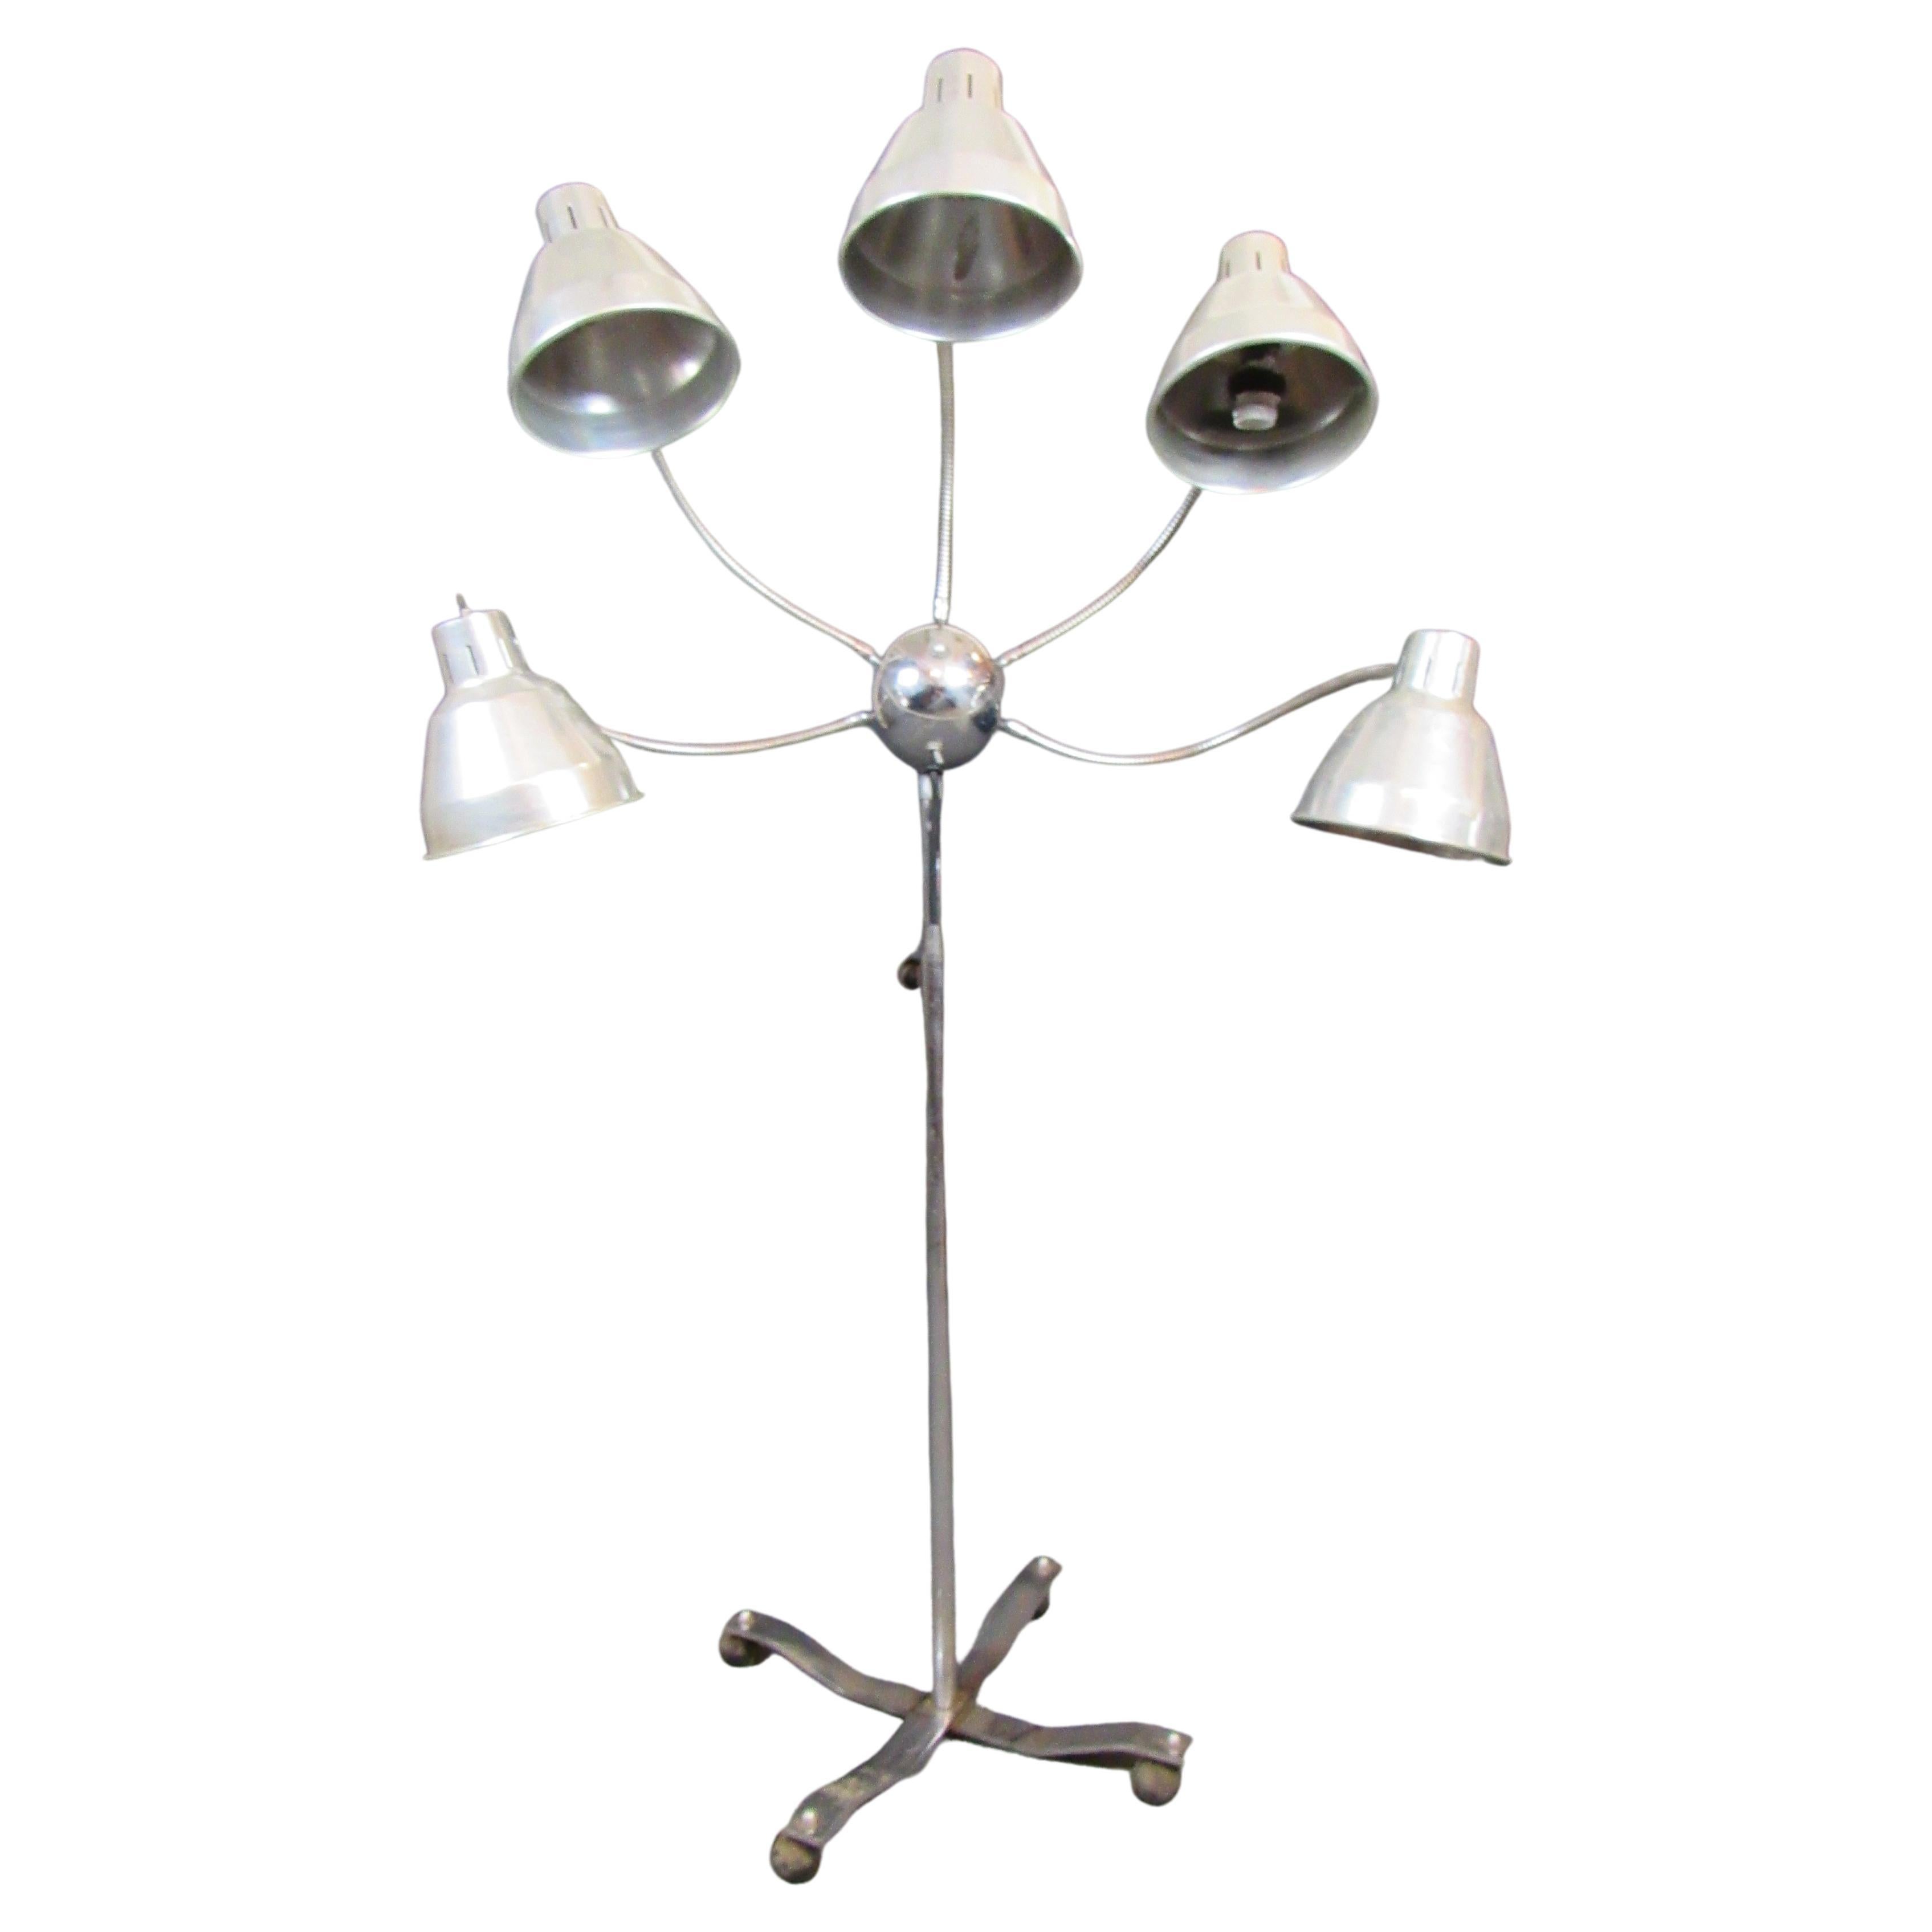 Funky Five-Headed Gooseneck Lamp For Sale